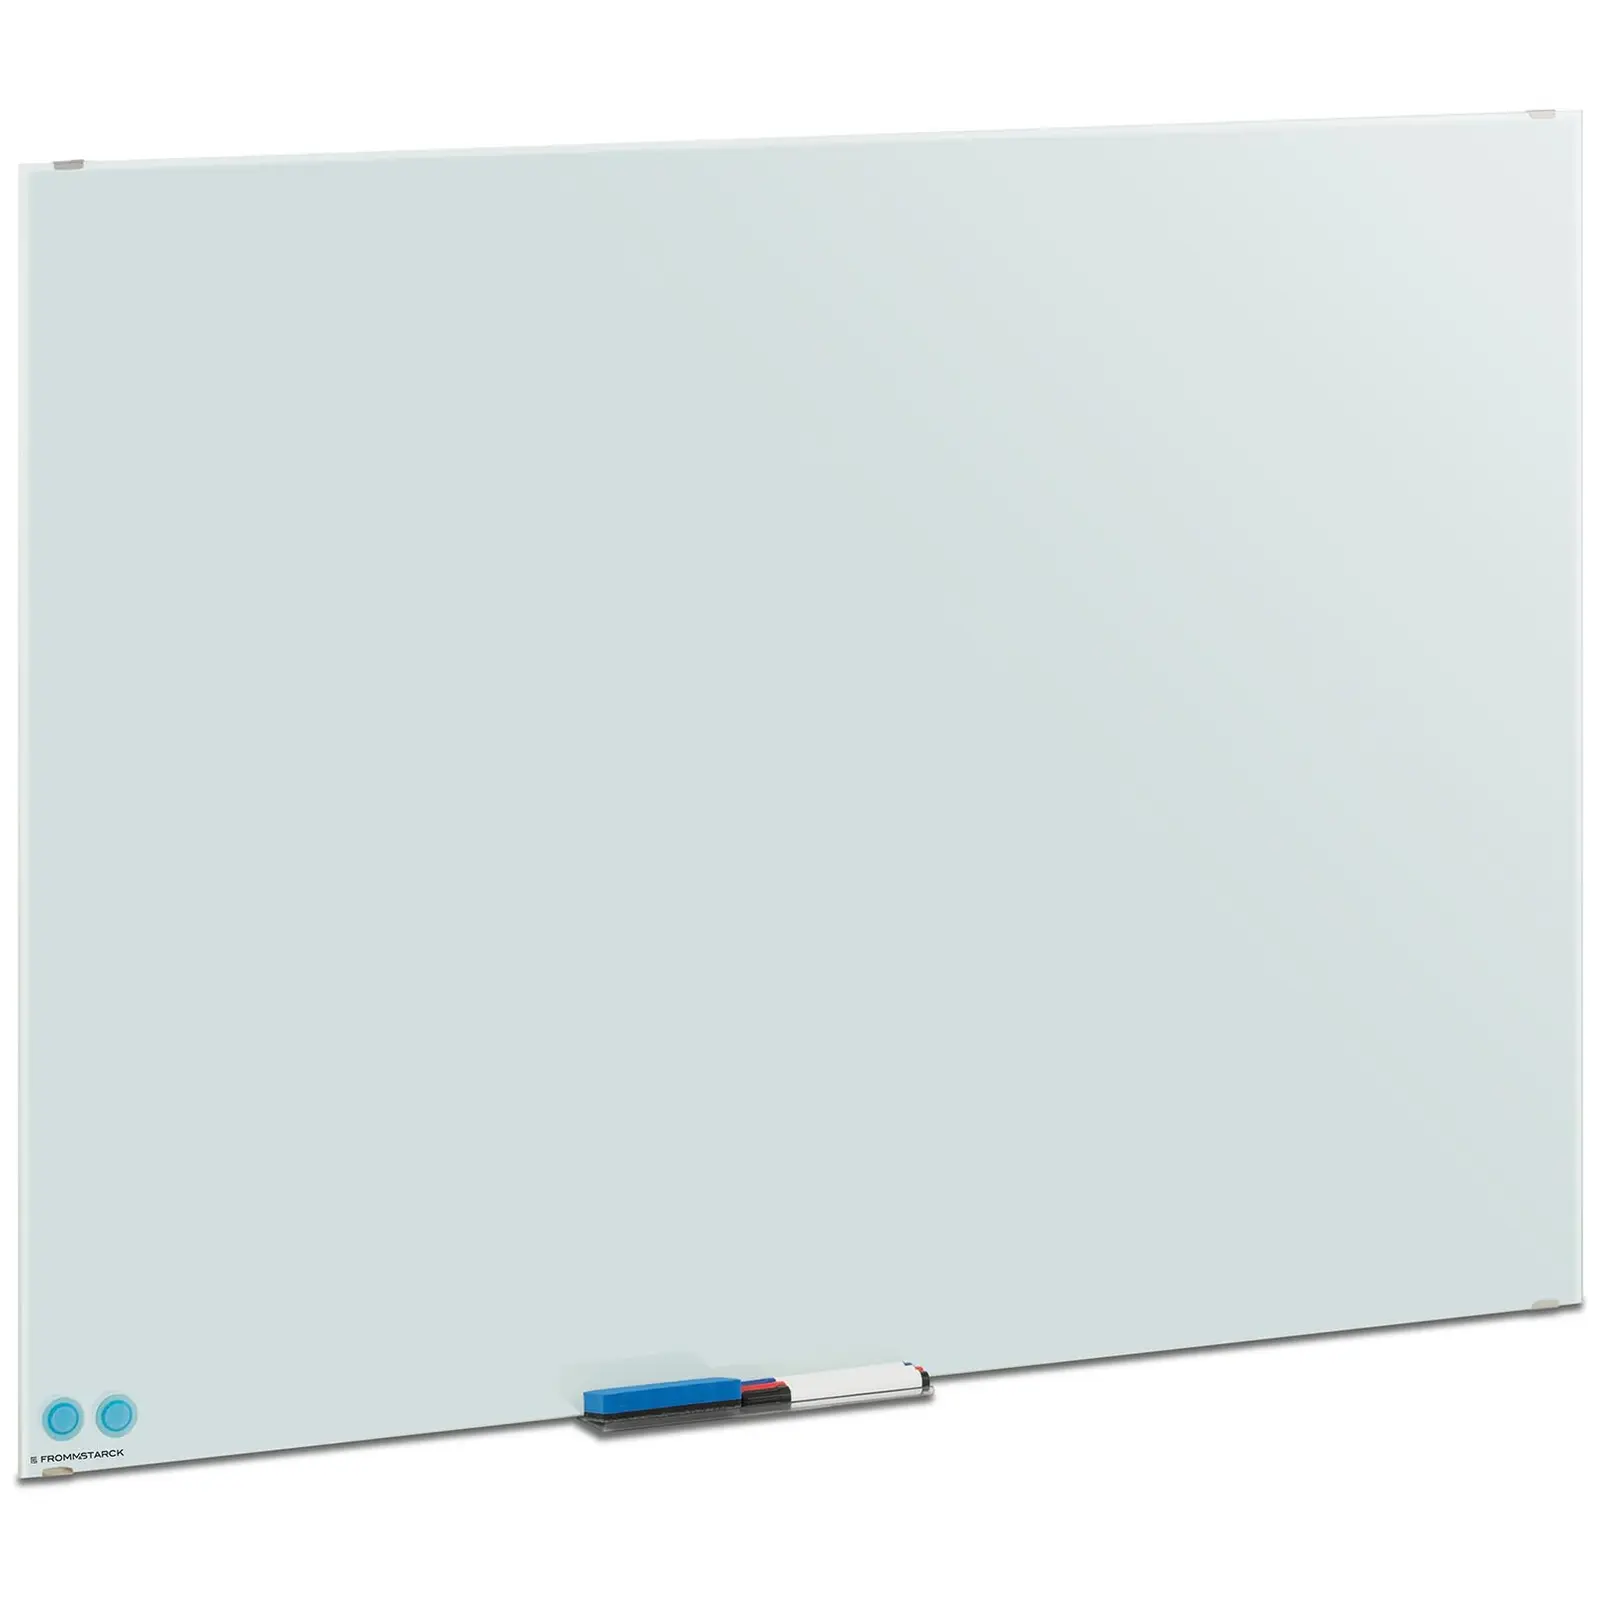 Whiteboard - 90 x 120 x 0.4 - magnetic